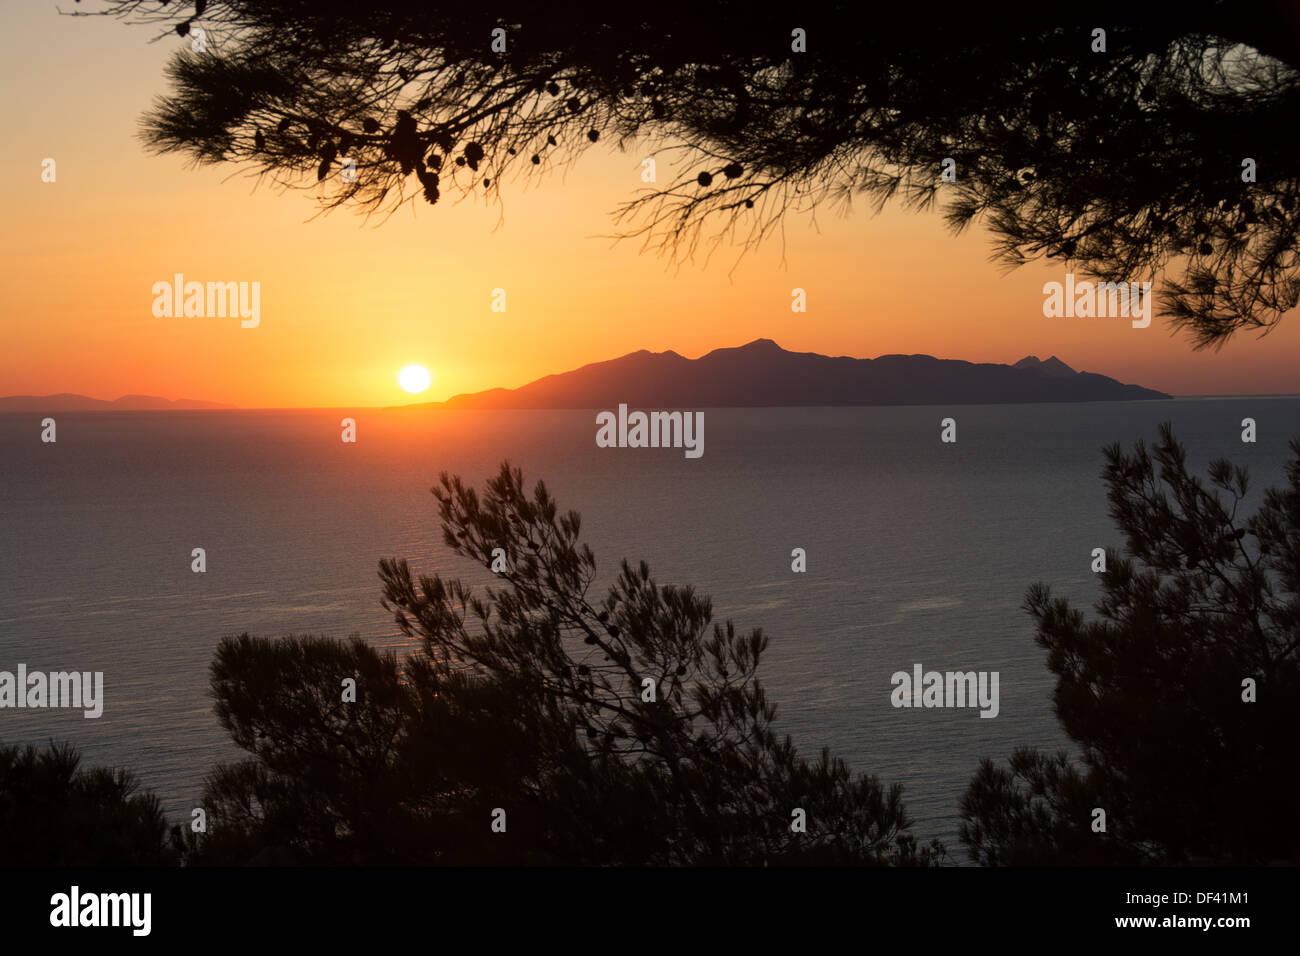 Sunrise over the Aegean as seen from Kamari on Santorini. The island in the distance is Anafi. 2013. Stock Photo